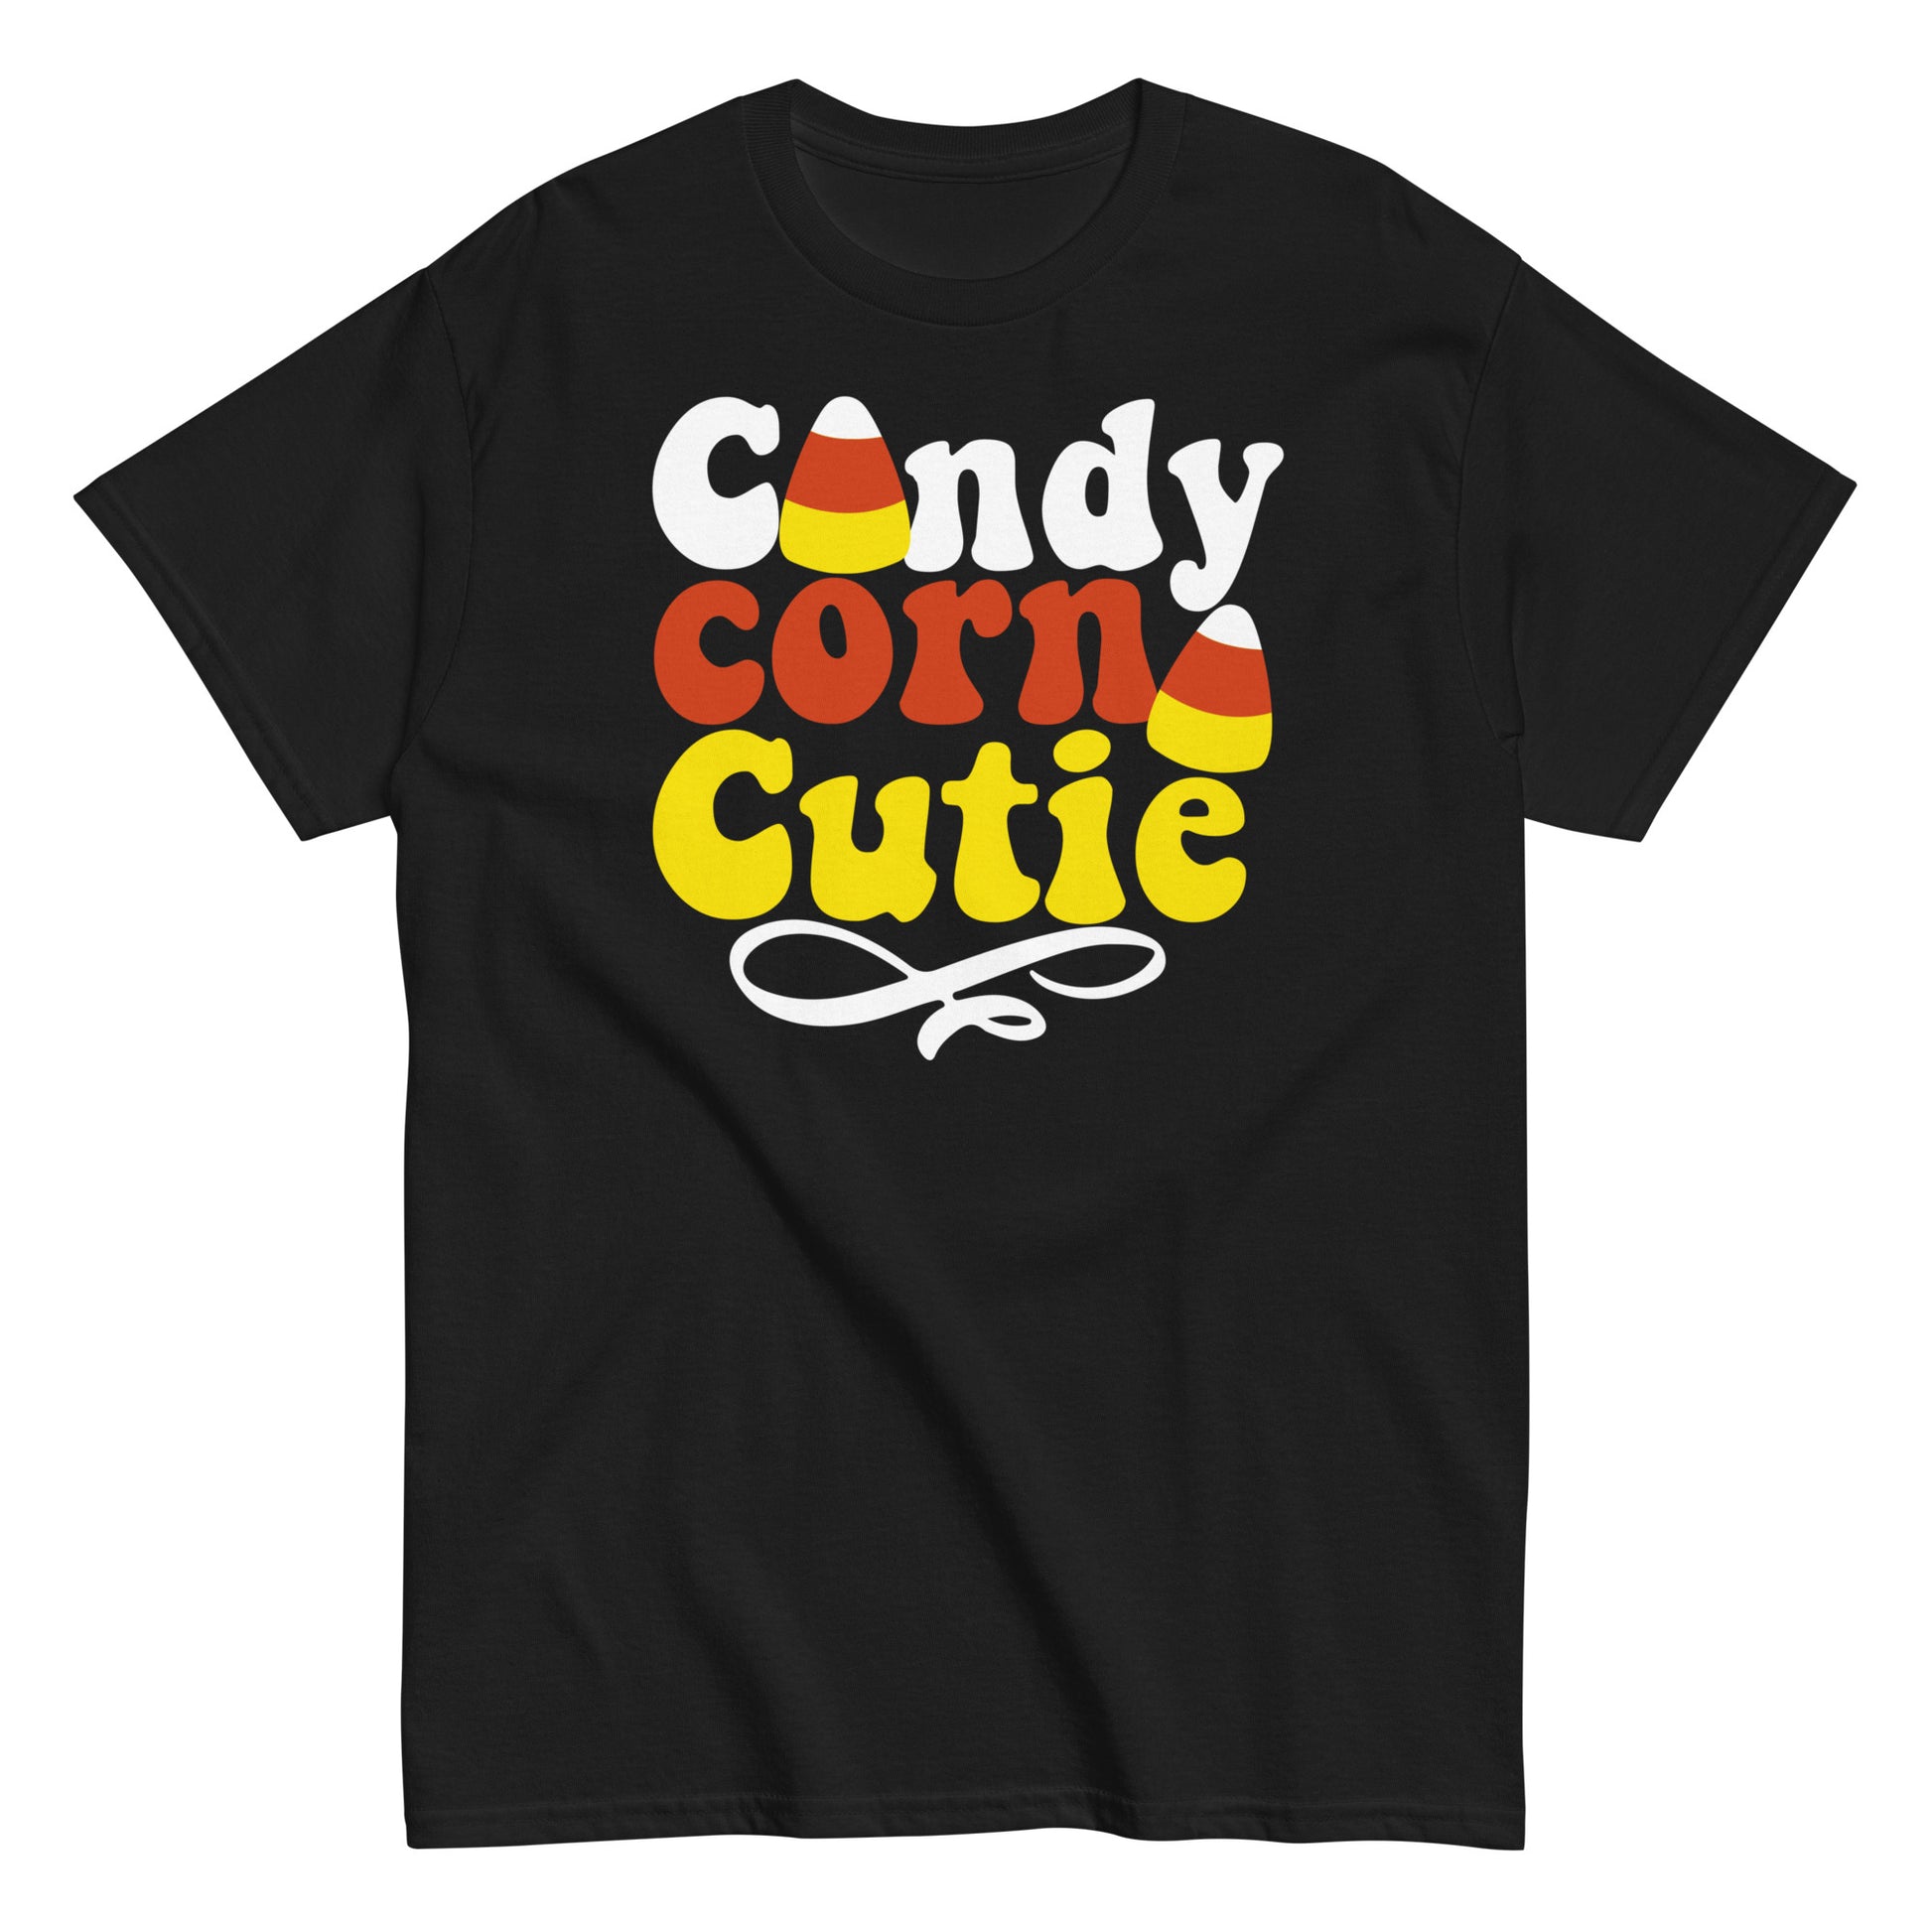 Candy Corn Cutie' Chic Halloween Tee - Soft Style